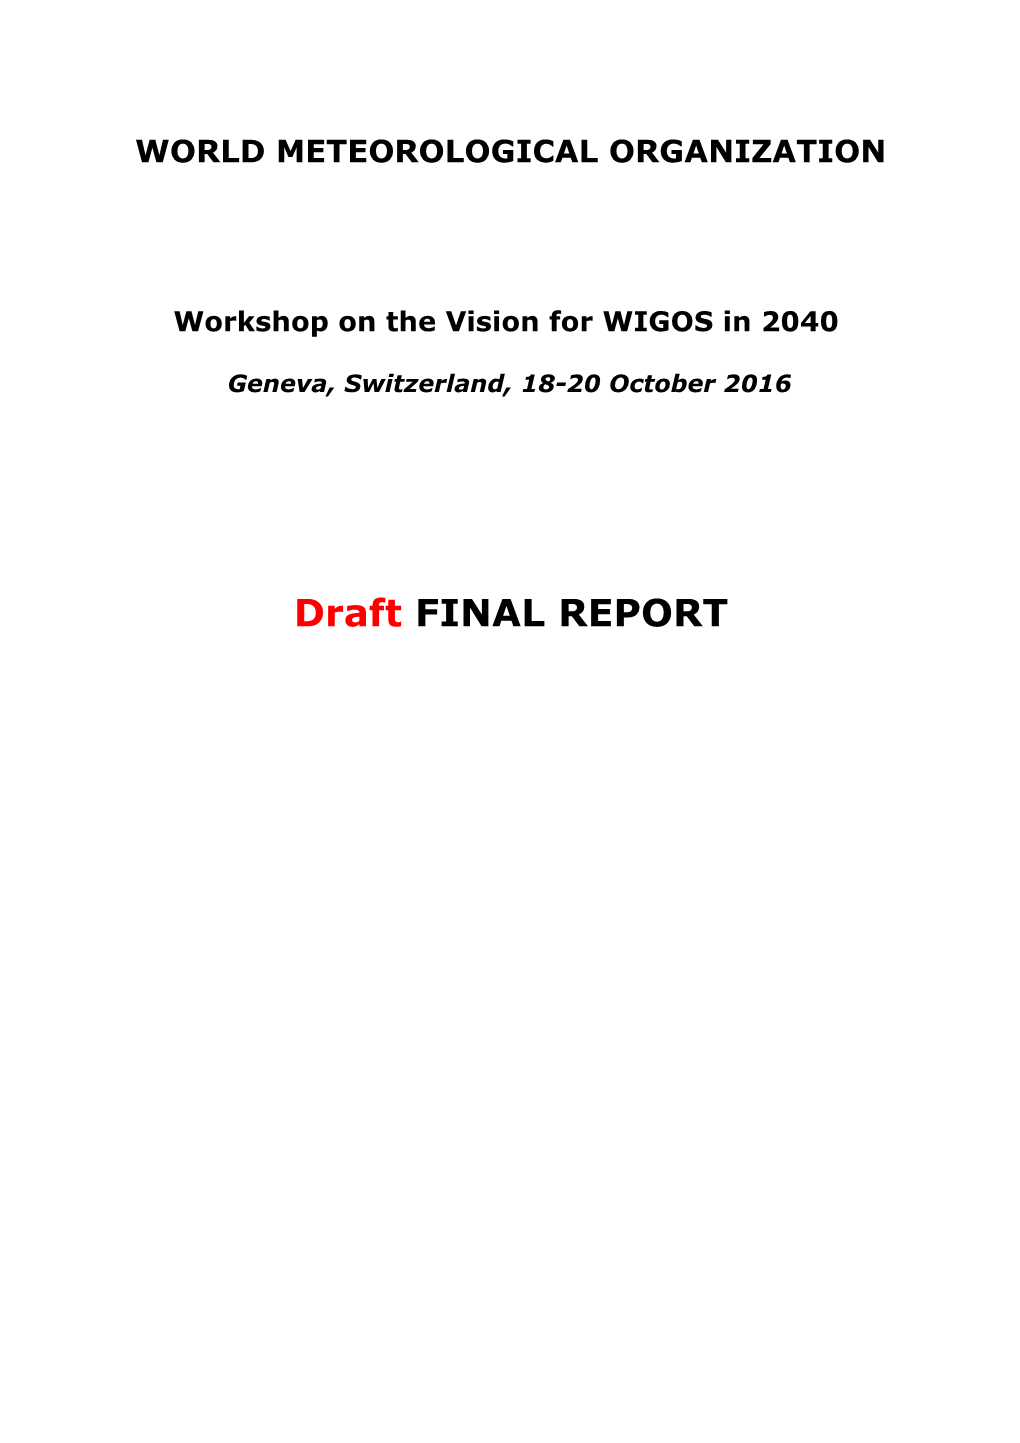 WIGOS-Vision-2040 Wksp, Oct 2016